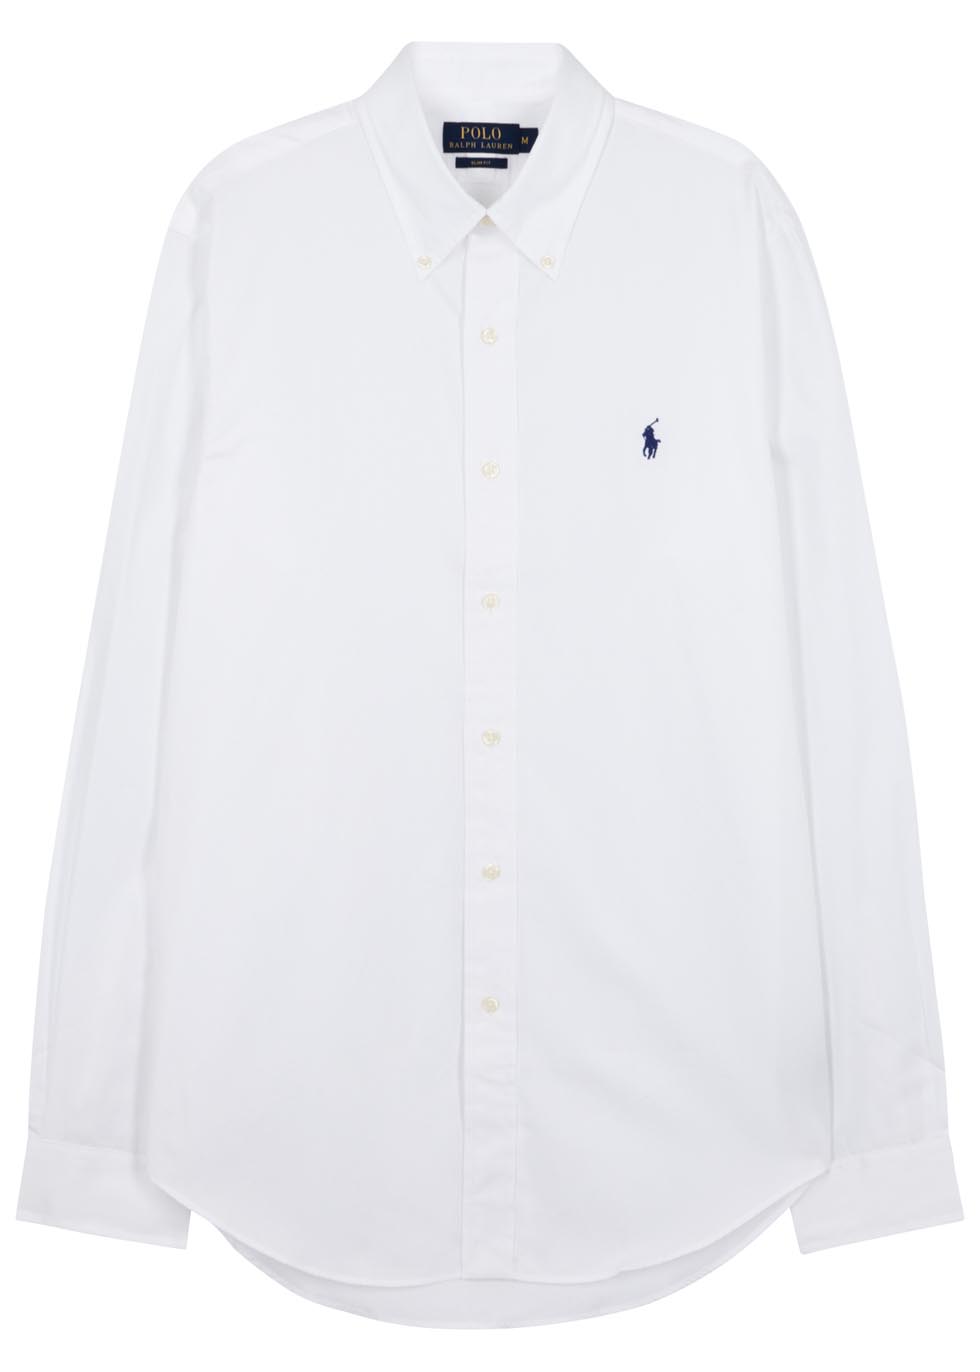 Polo Ralph Lauren White slim cotton shirt - Harvey Nichols